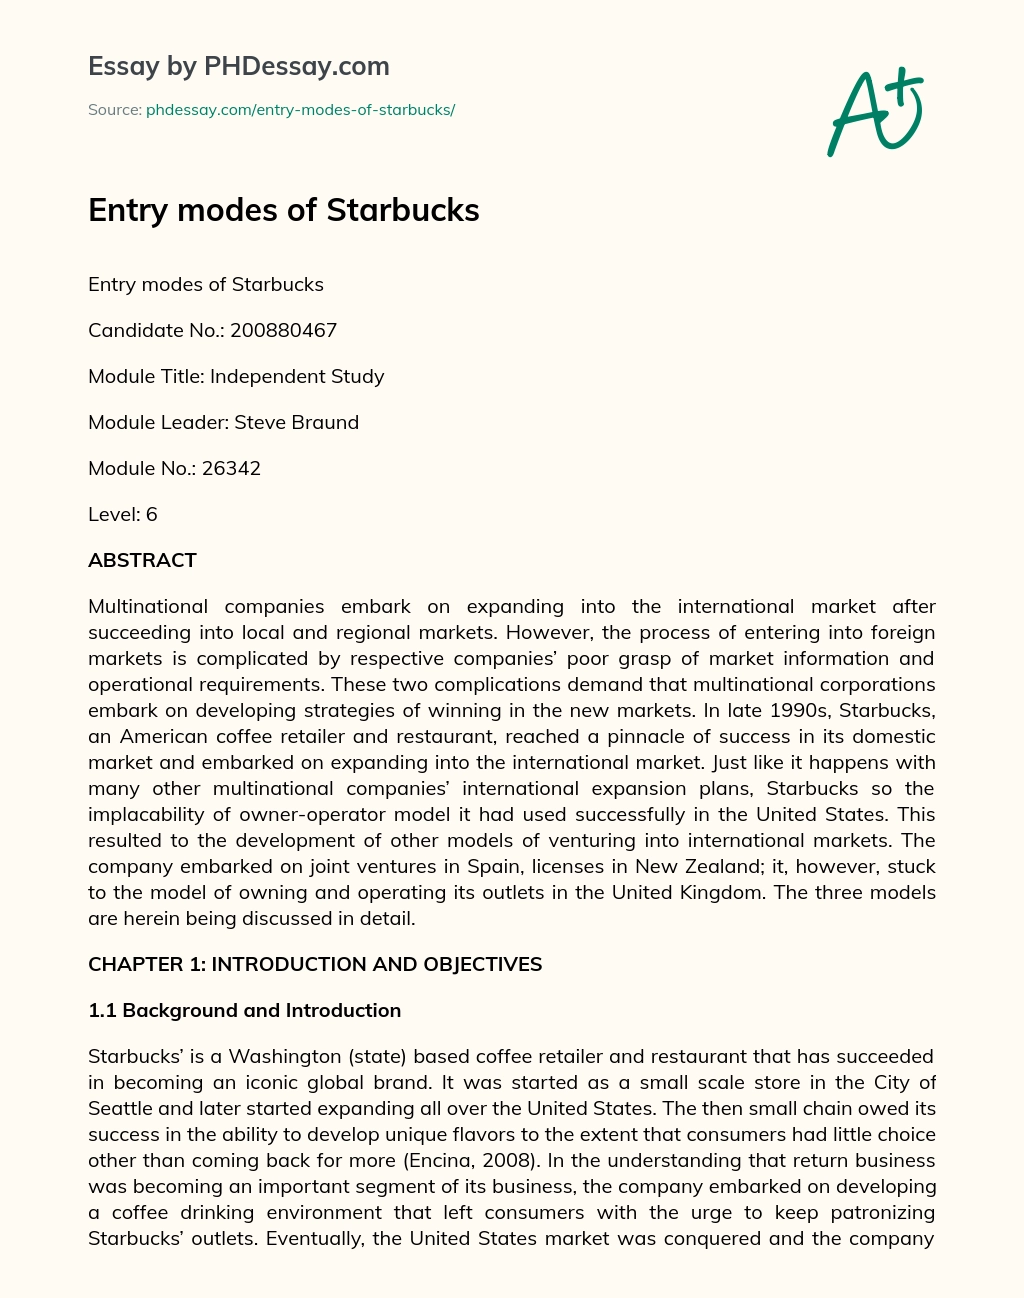 Entry modes of Starbucks essay